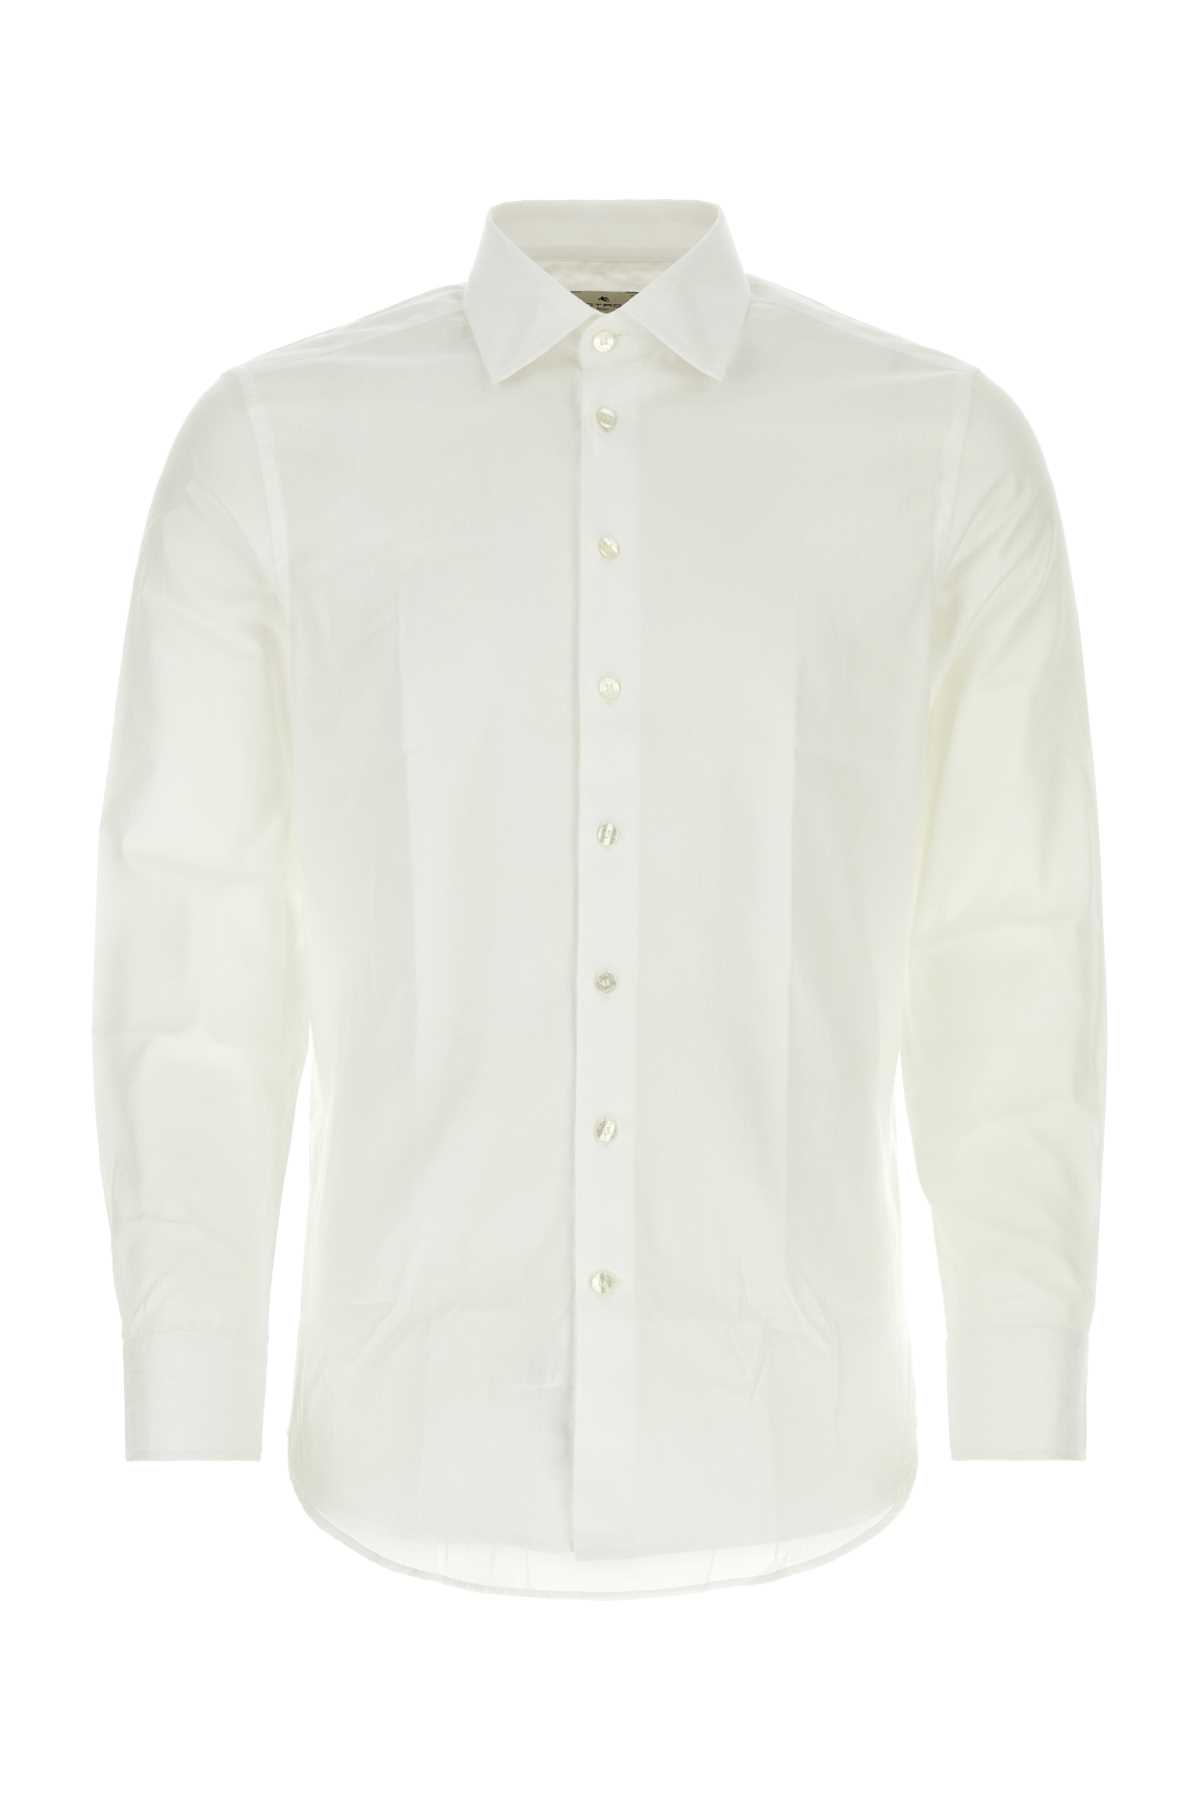 Etro White Poplin Shirt